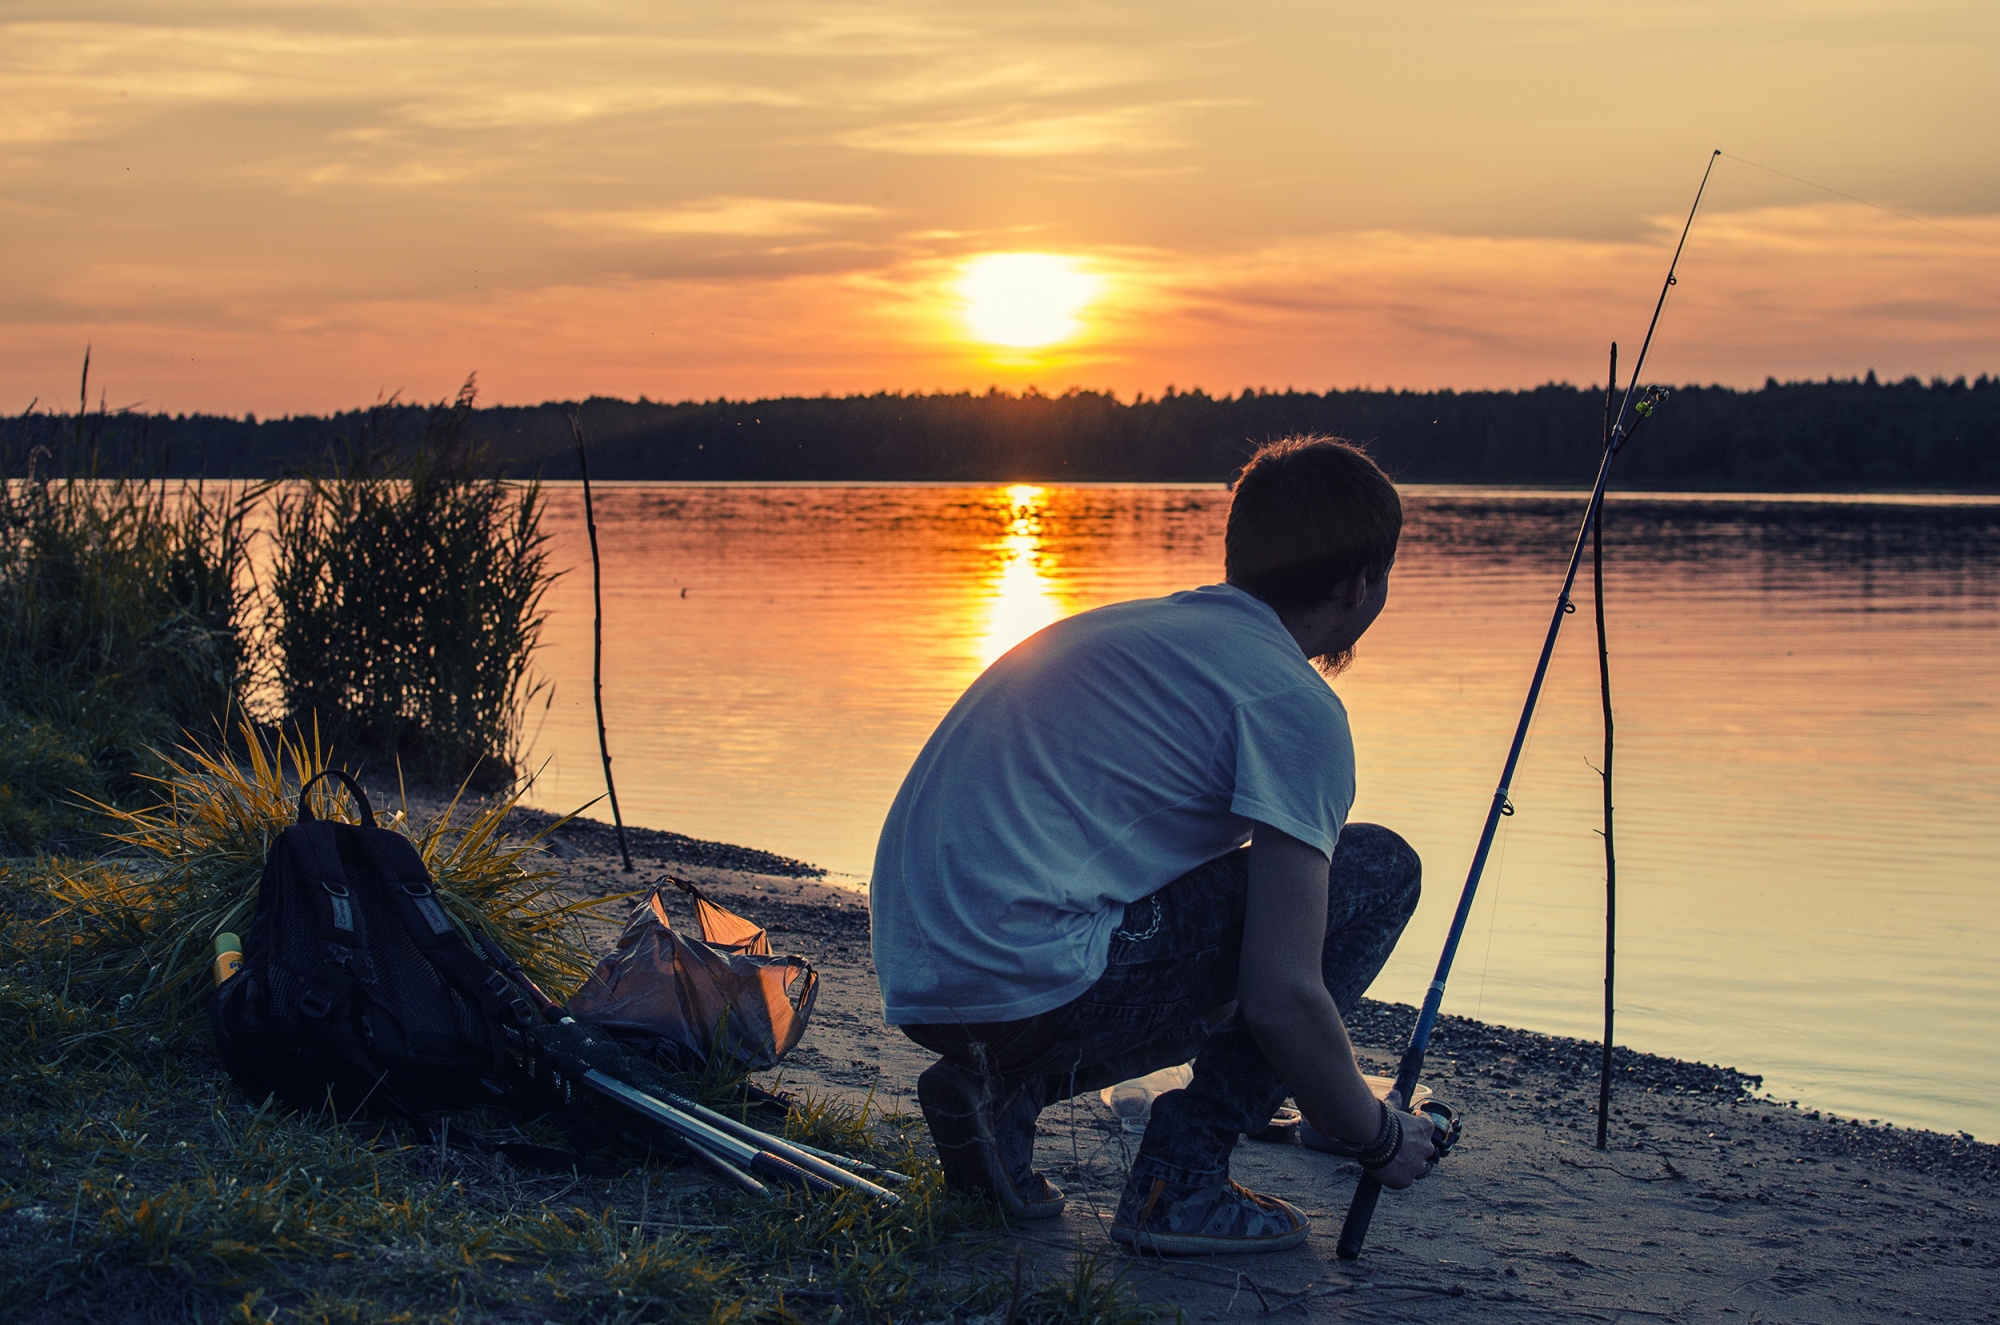 Мальчик ловил рыбу на реке. Летняя рыбалка. Рыбак на берегу. Природа рыбалка. Красивая природа рыбалка.